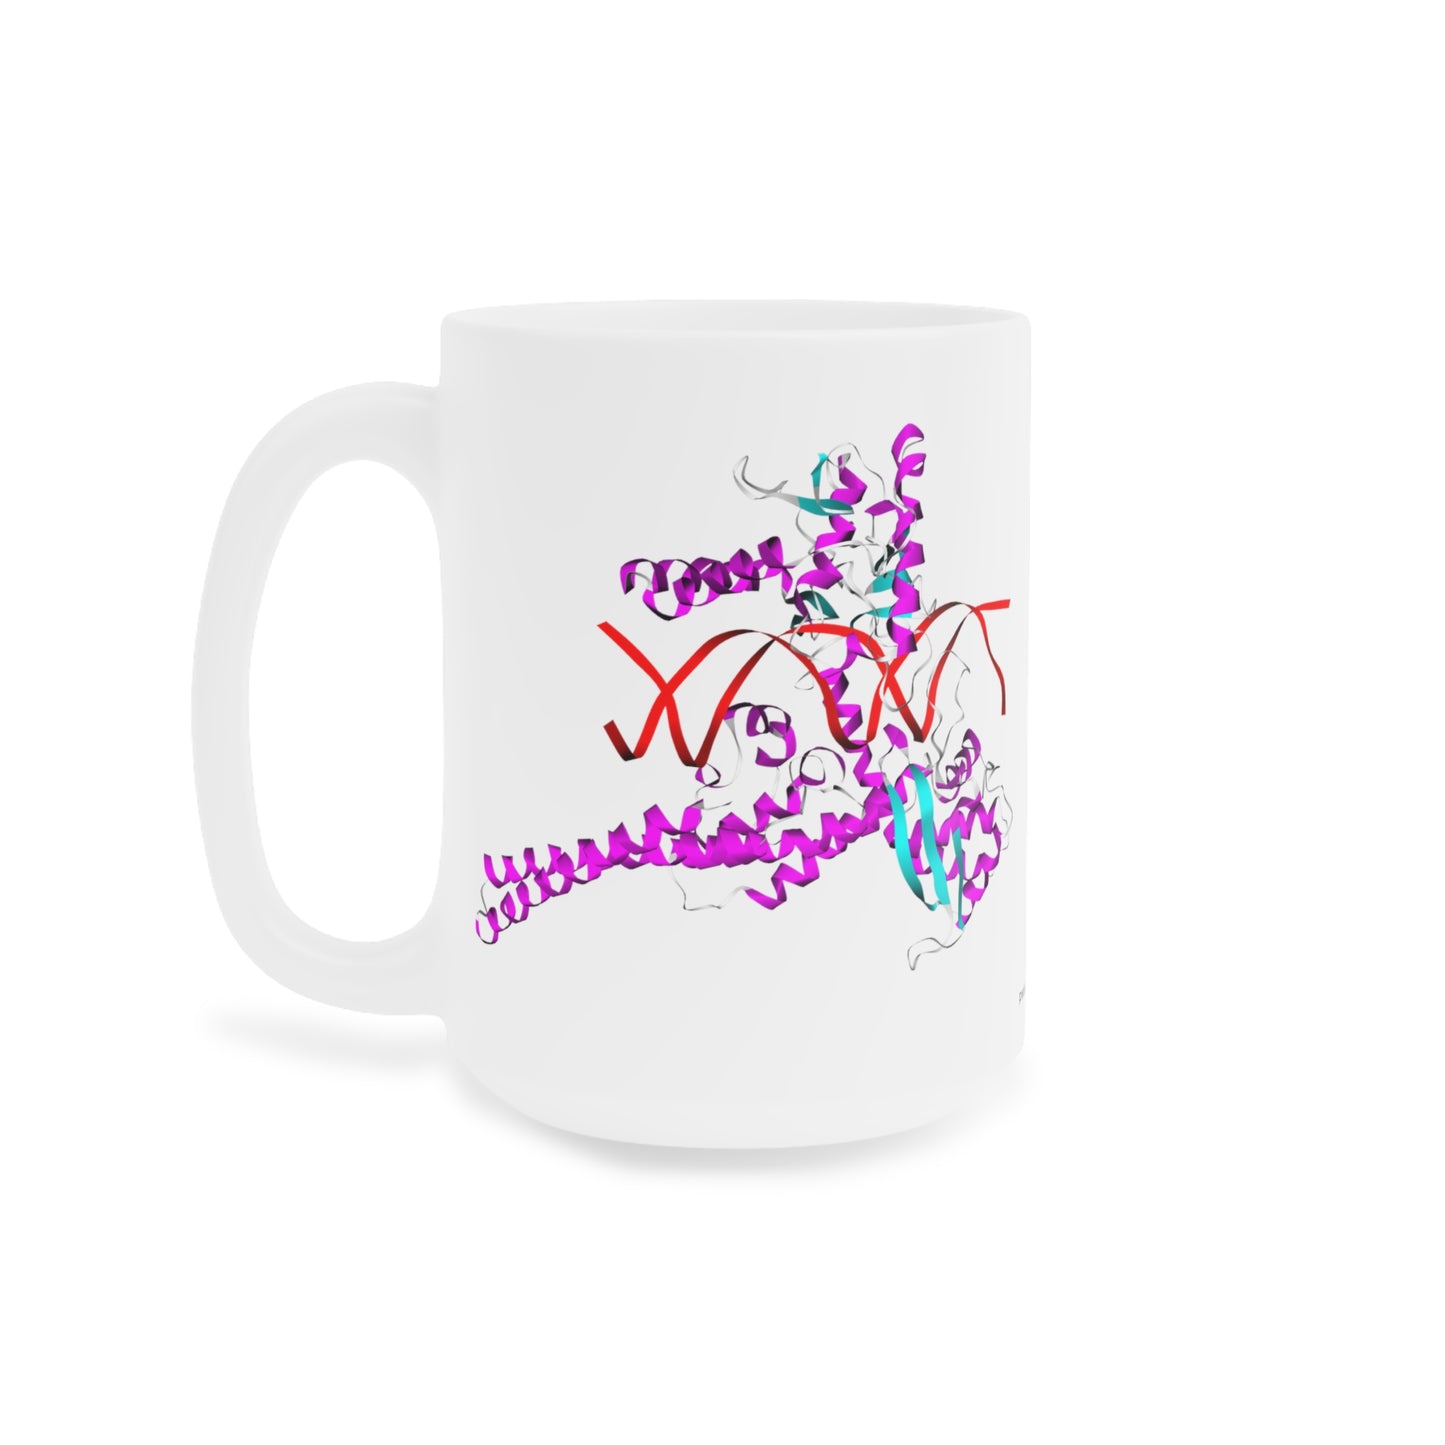 Coffee Mug 15oz - Topoisomerase